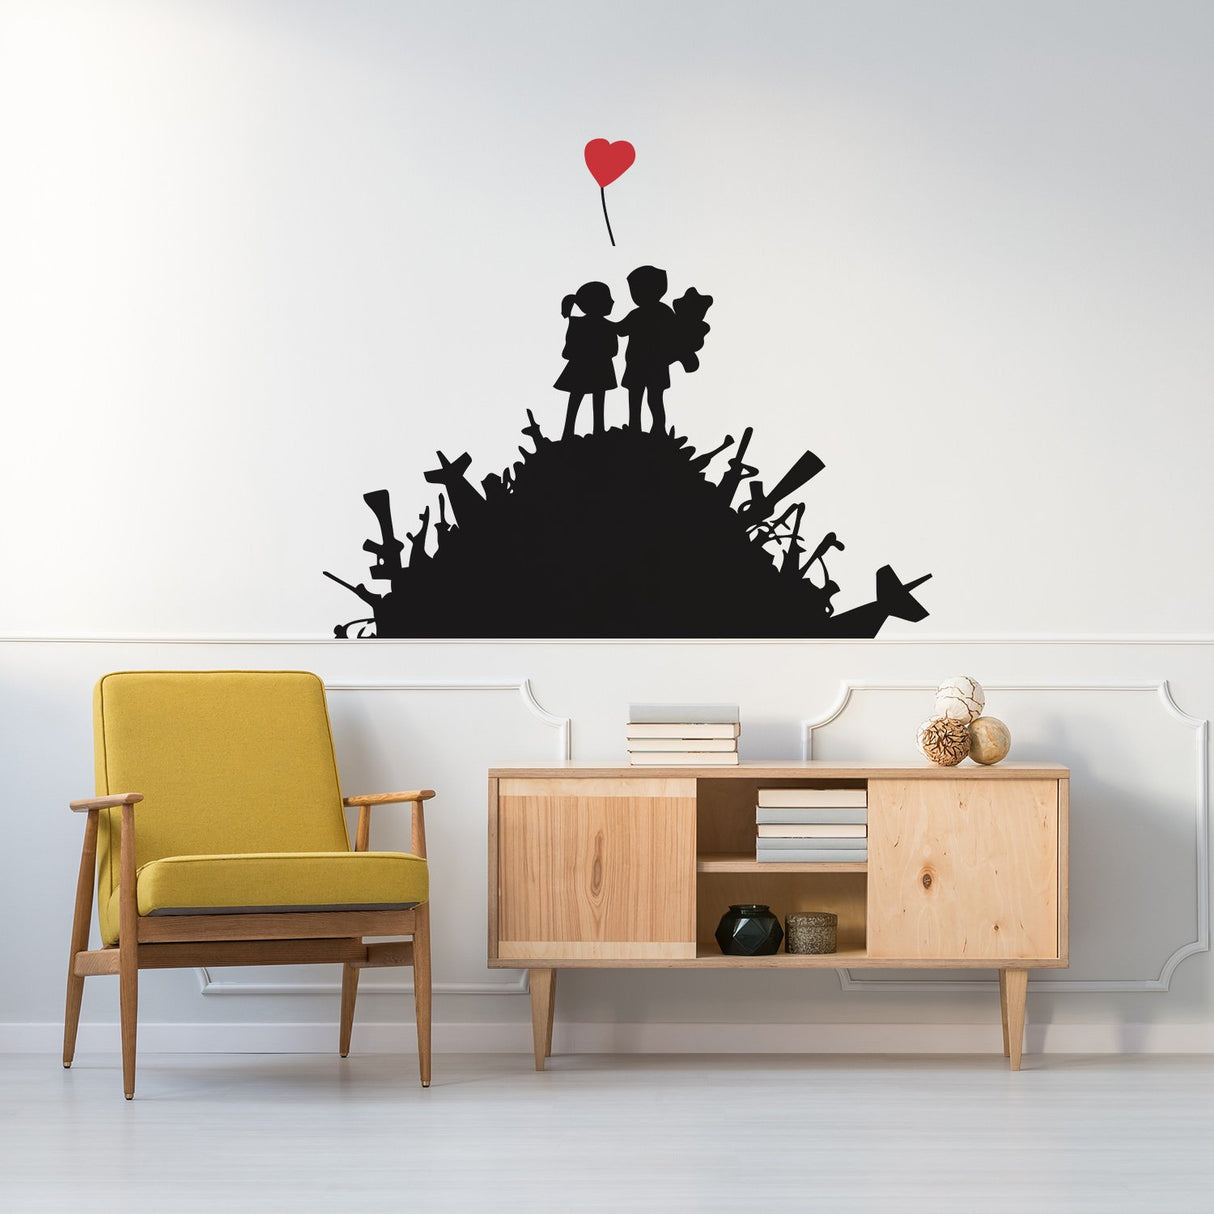 Banksy Boy And Girl Friend Wall Sticker - Kid With A Child Art Balloon Decor Room Street Graffiti Decal